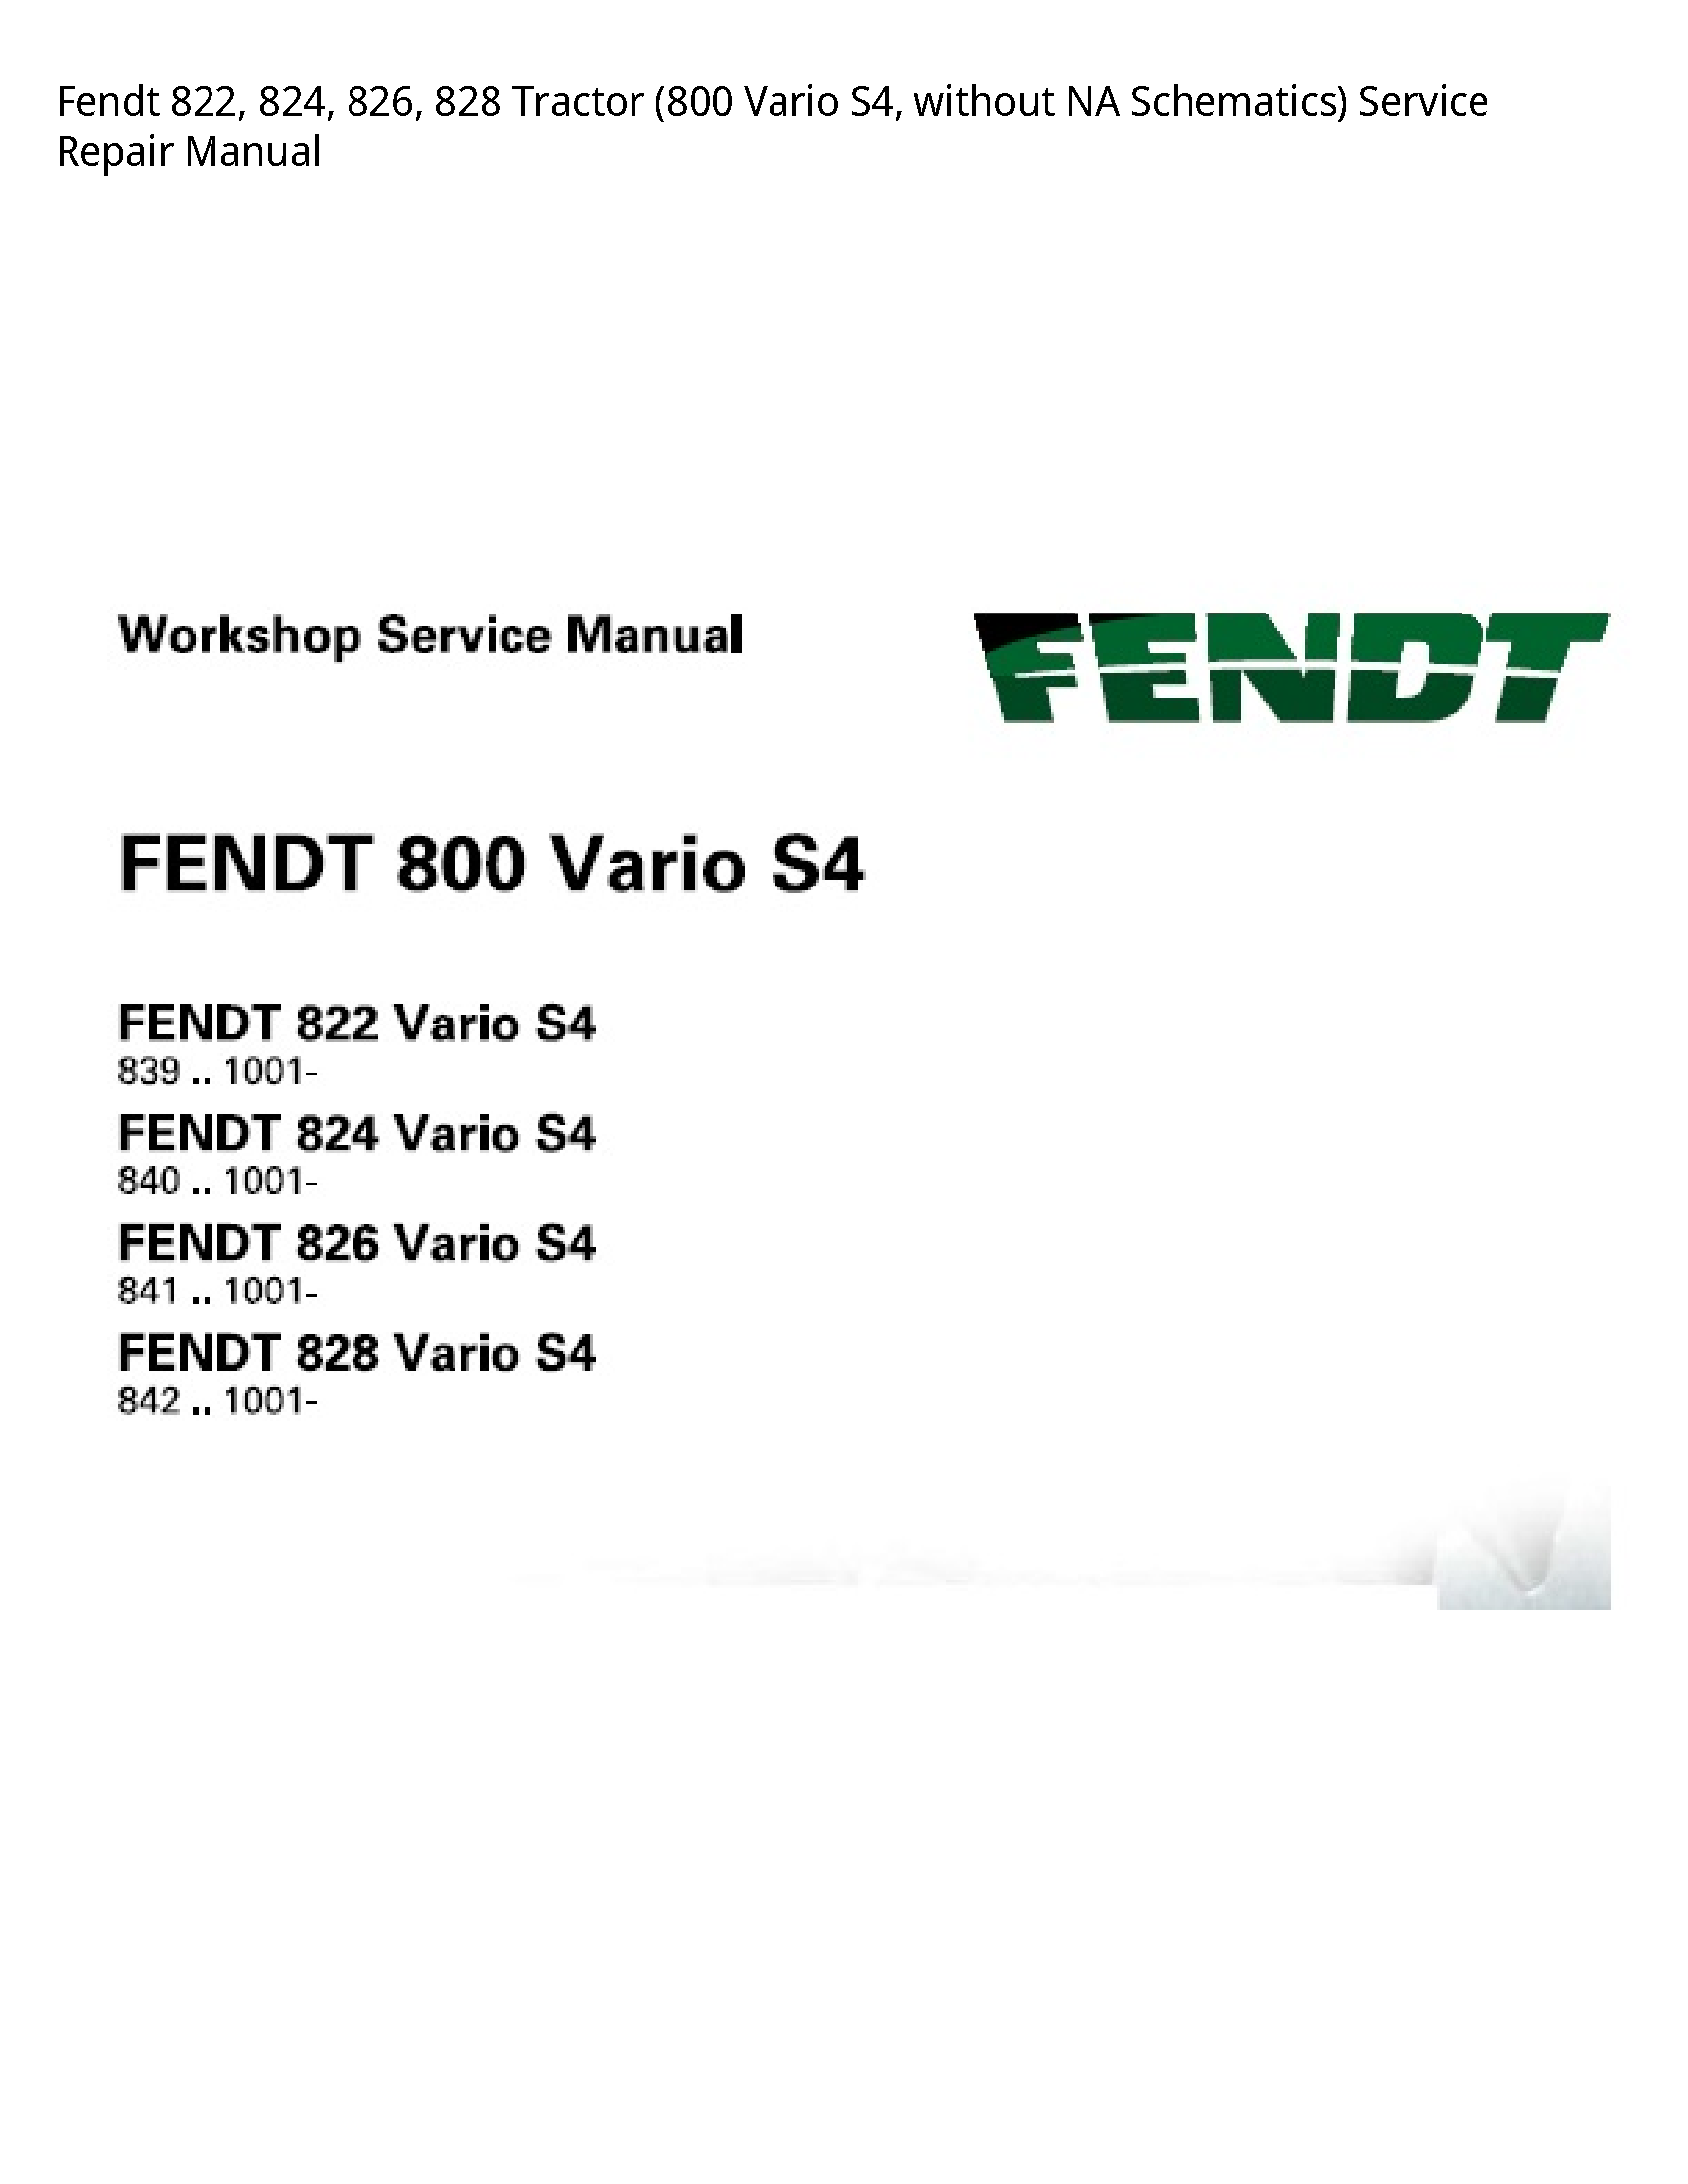 Fendt 822 Tractor Vario without NA Schematics) manual